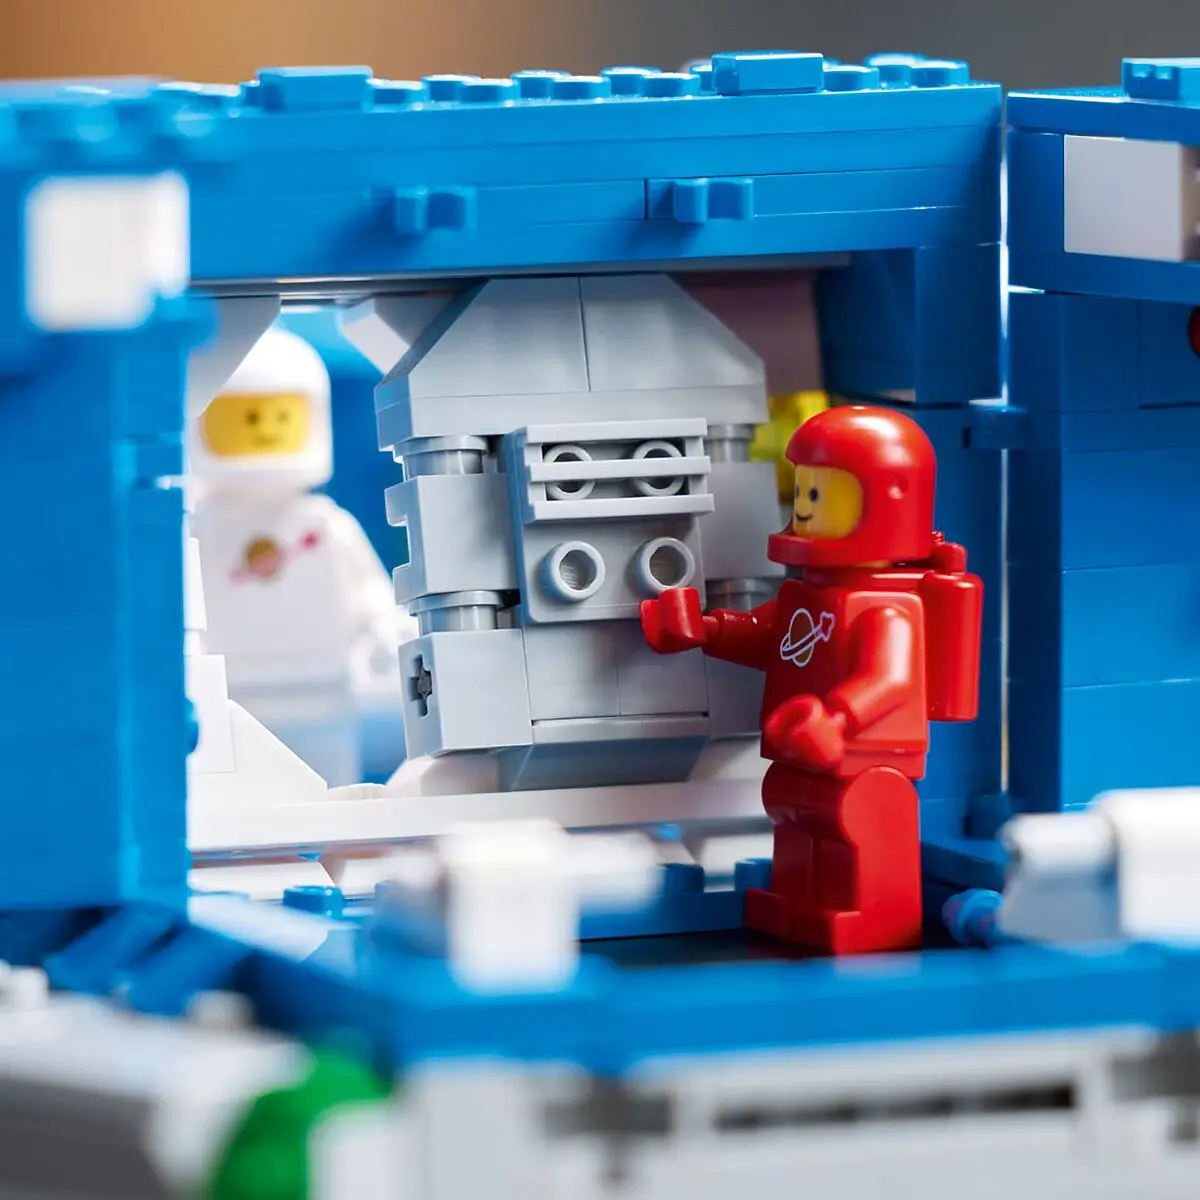 Make It Blocks, Toys, Make It Blocks 2 Spacemen Aliens Set New Lot Lego